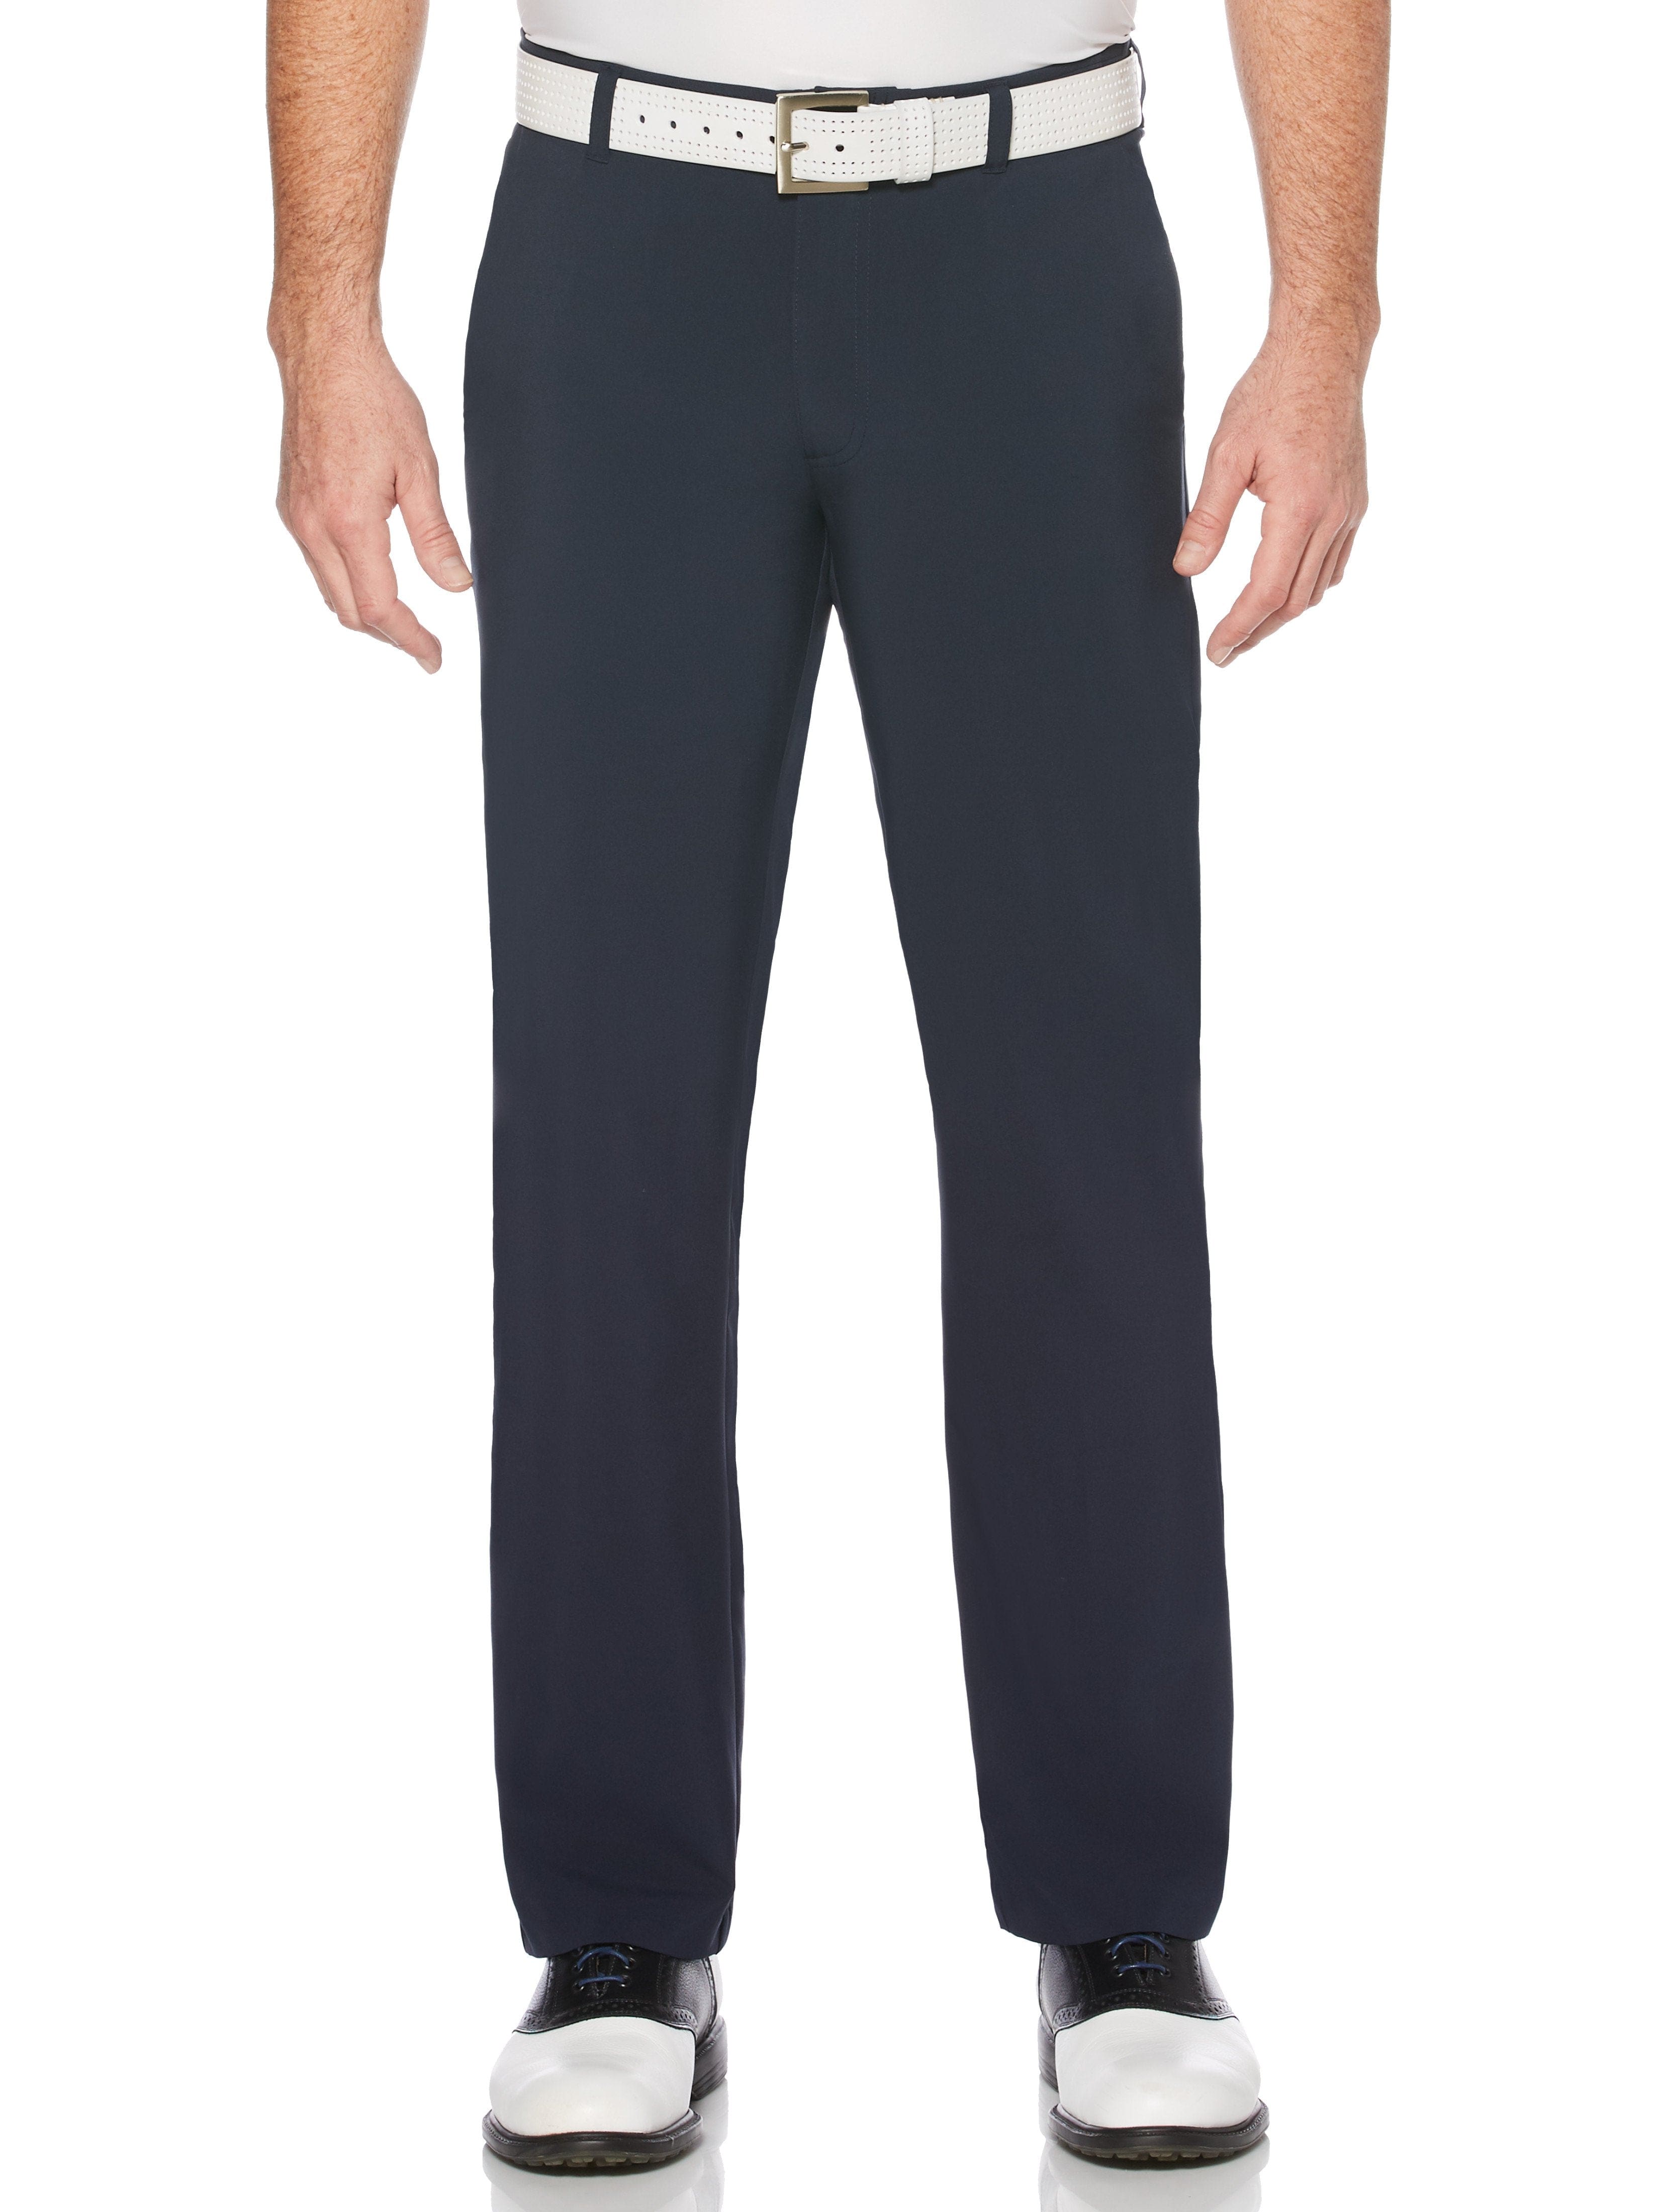 Jack Nicklaus Mens Flat Front Active Flex Pants, Size 38 x 29, Classic Navy Blue, Polyester/Elastane | Golf Apparel Shop